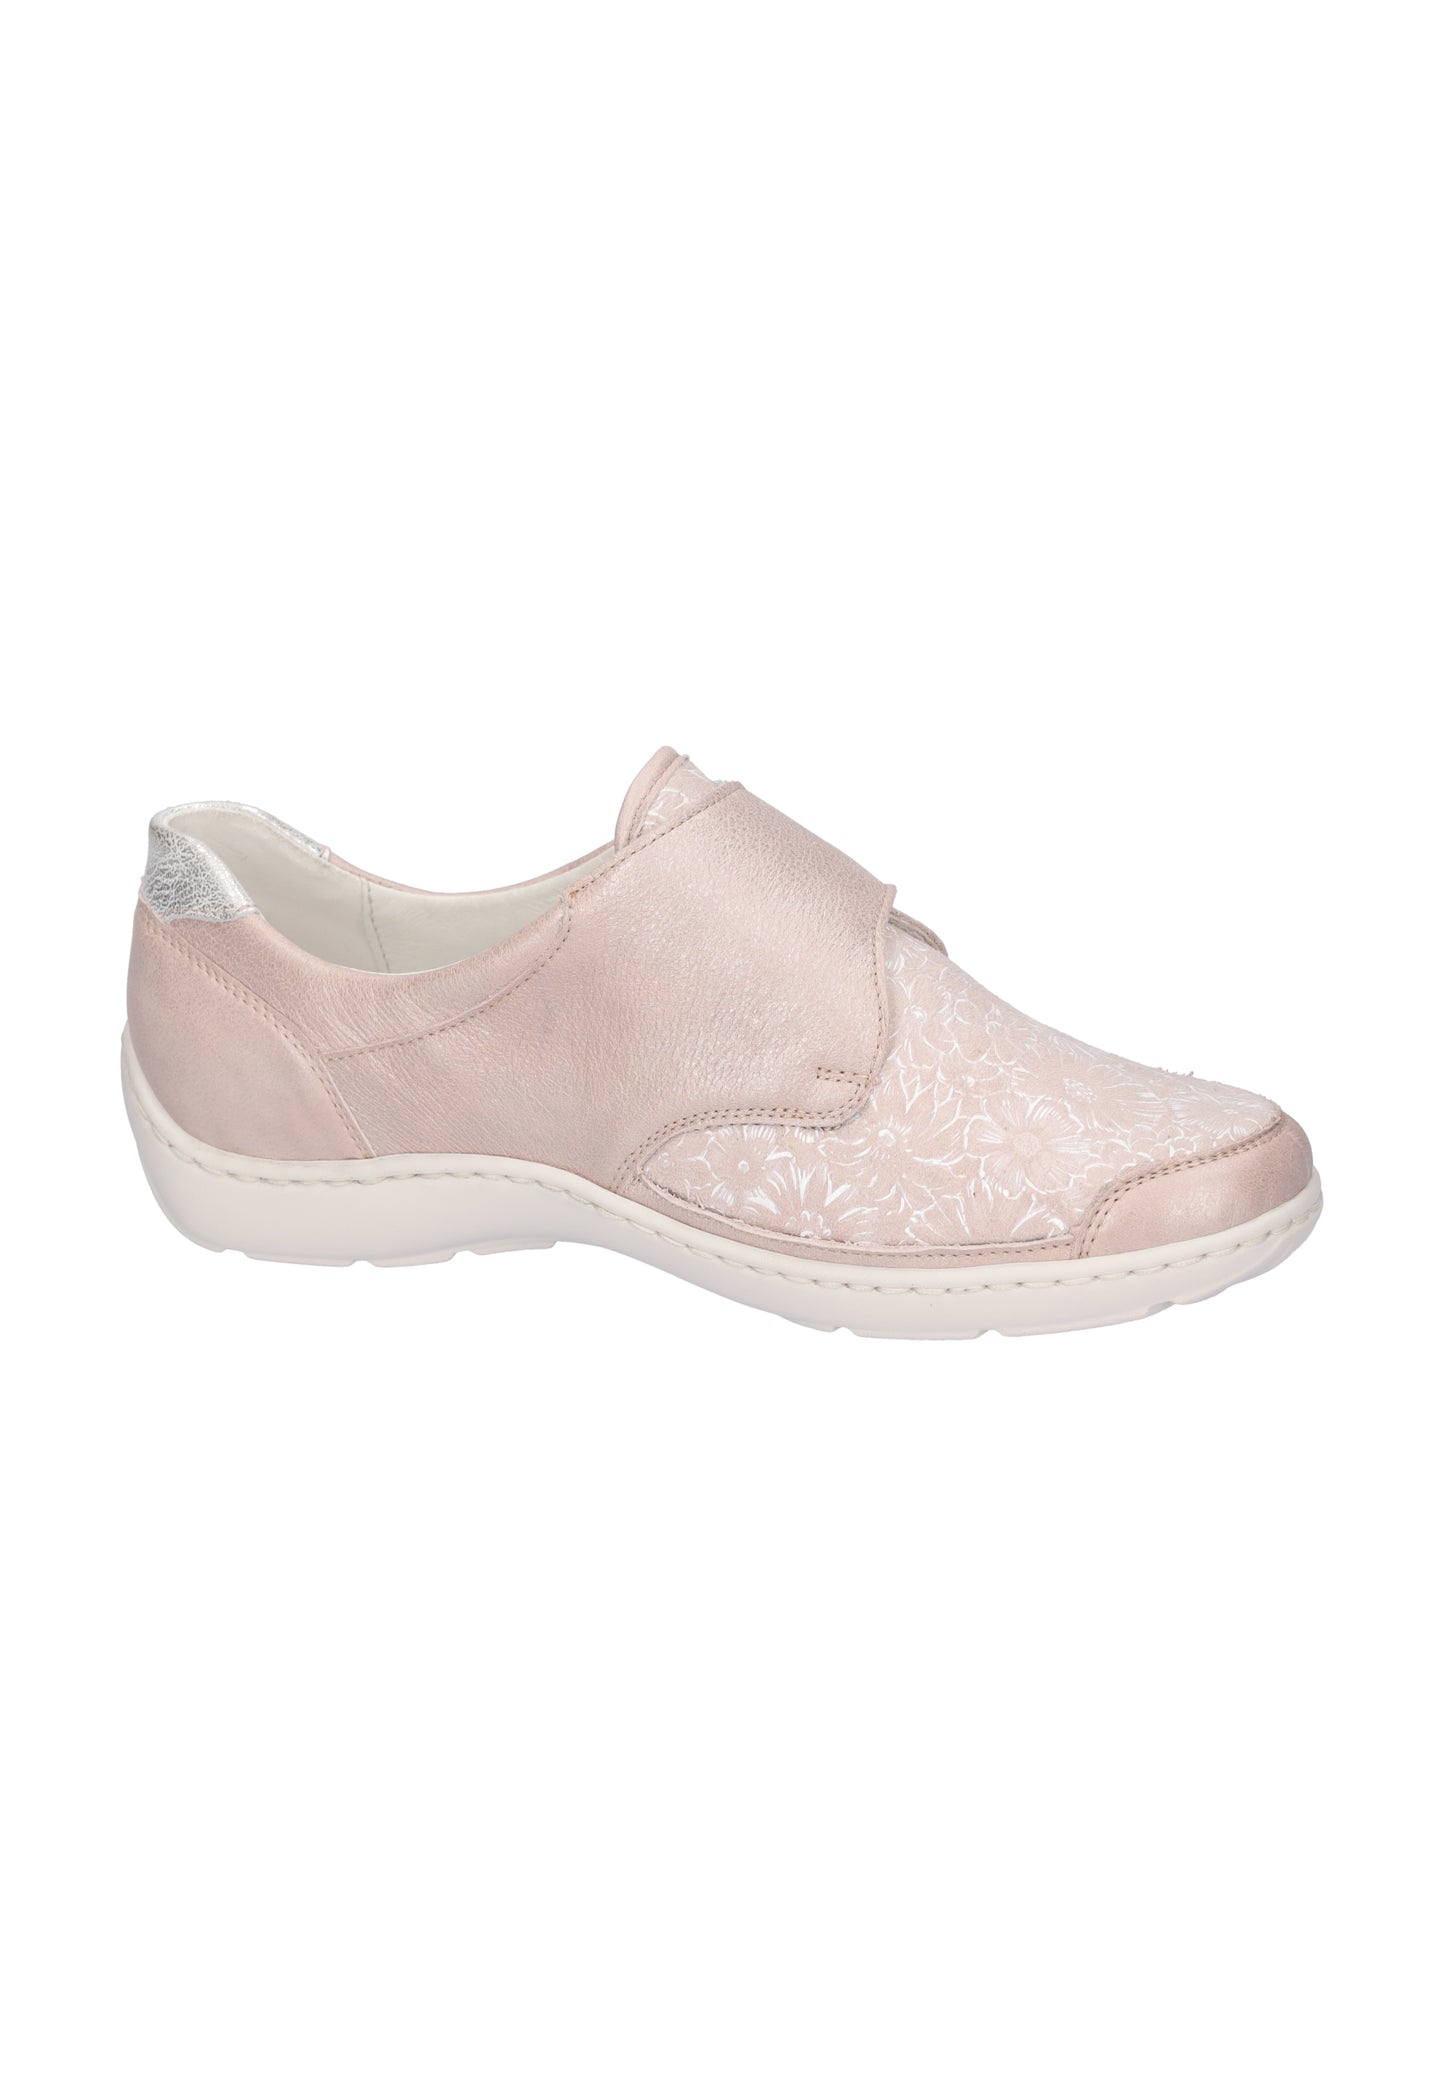 Waldlaufer 496H31 324 089 Henni Pink Velcro Shoes